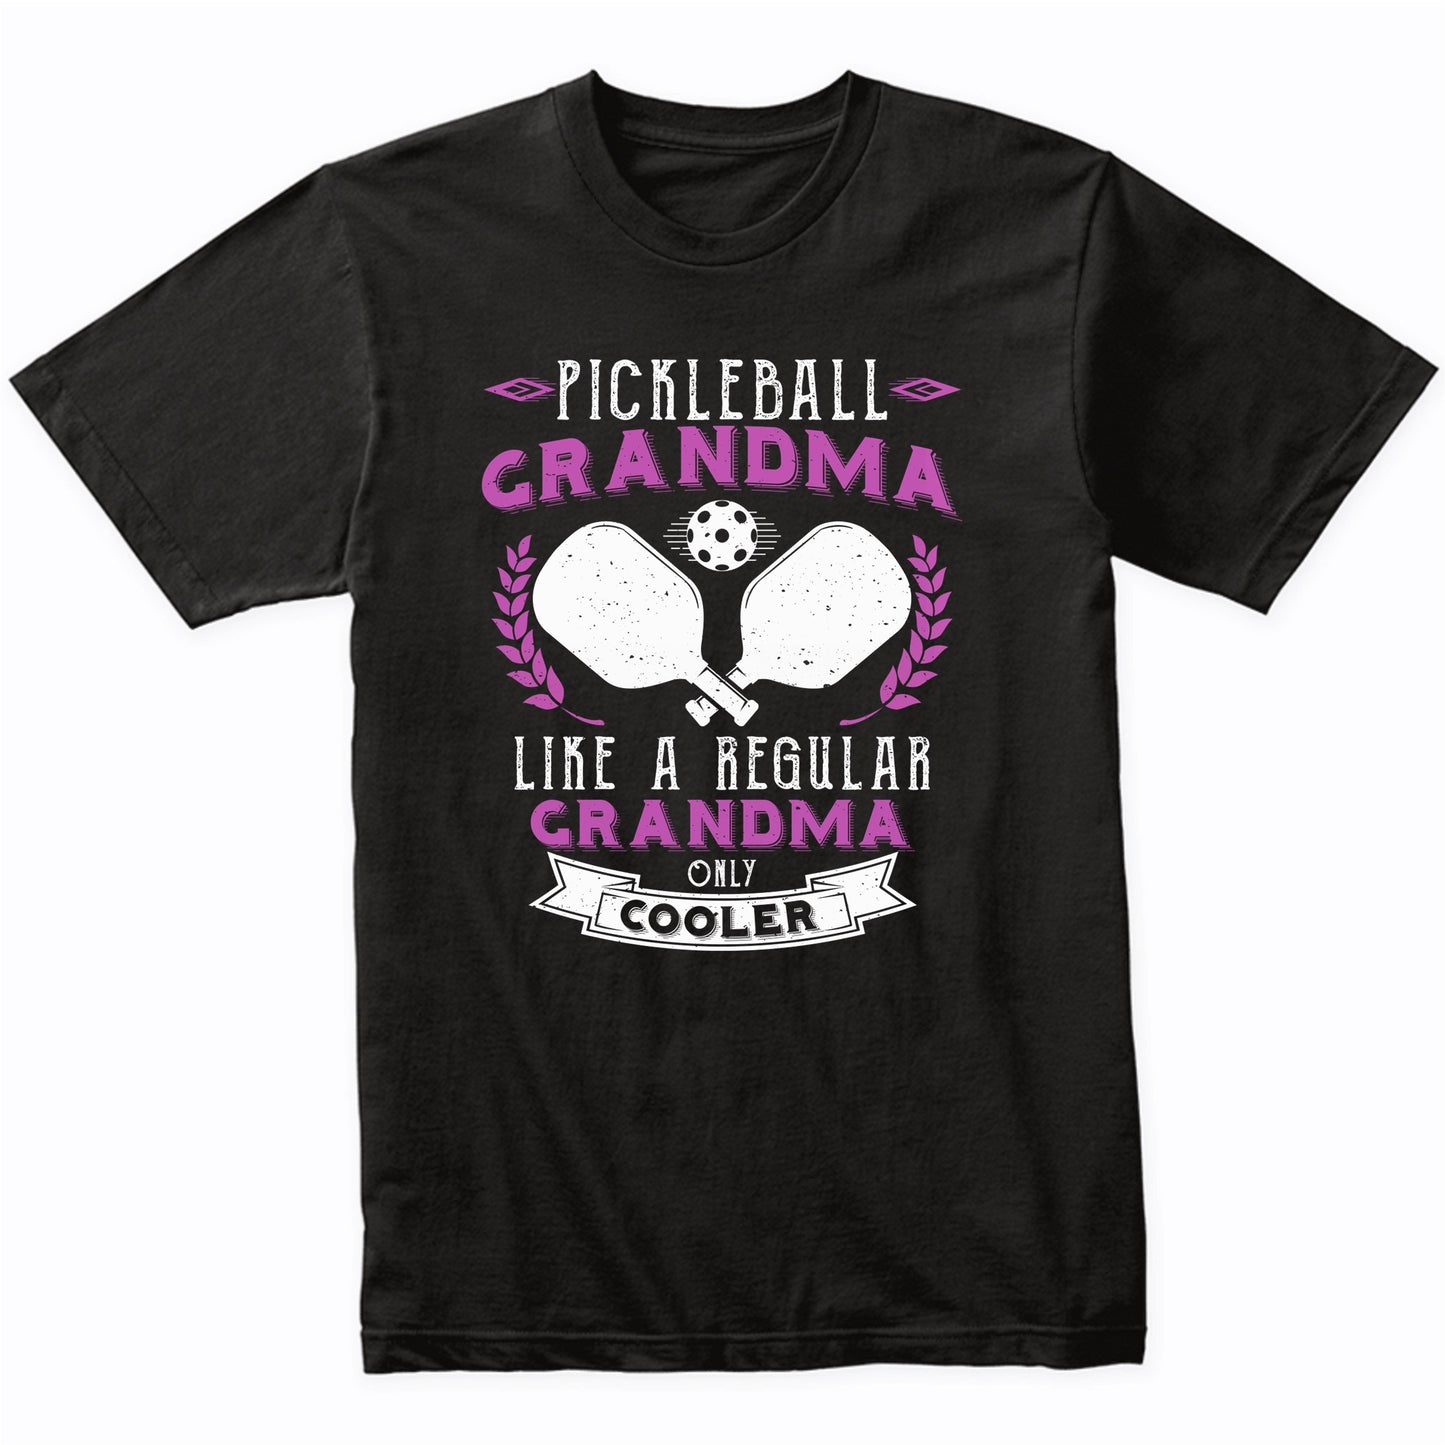 Pickleball Grandma Like A Regular Grandma Only Cooler T-Shirt